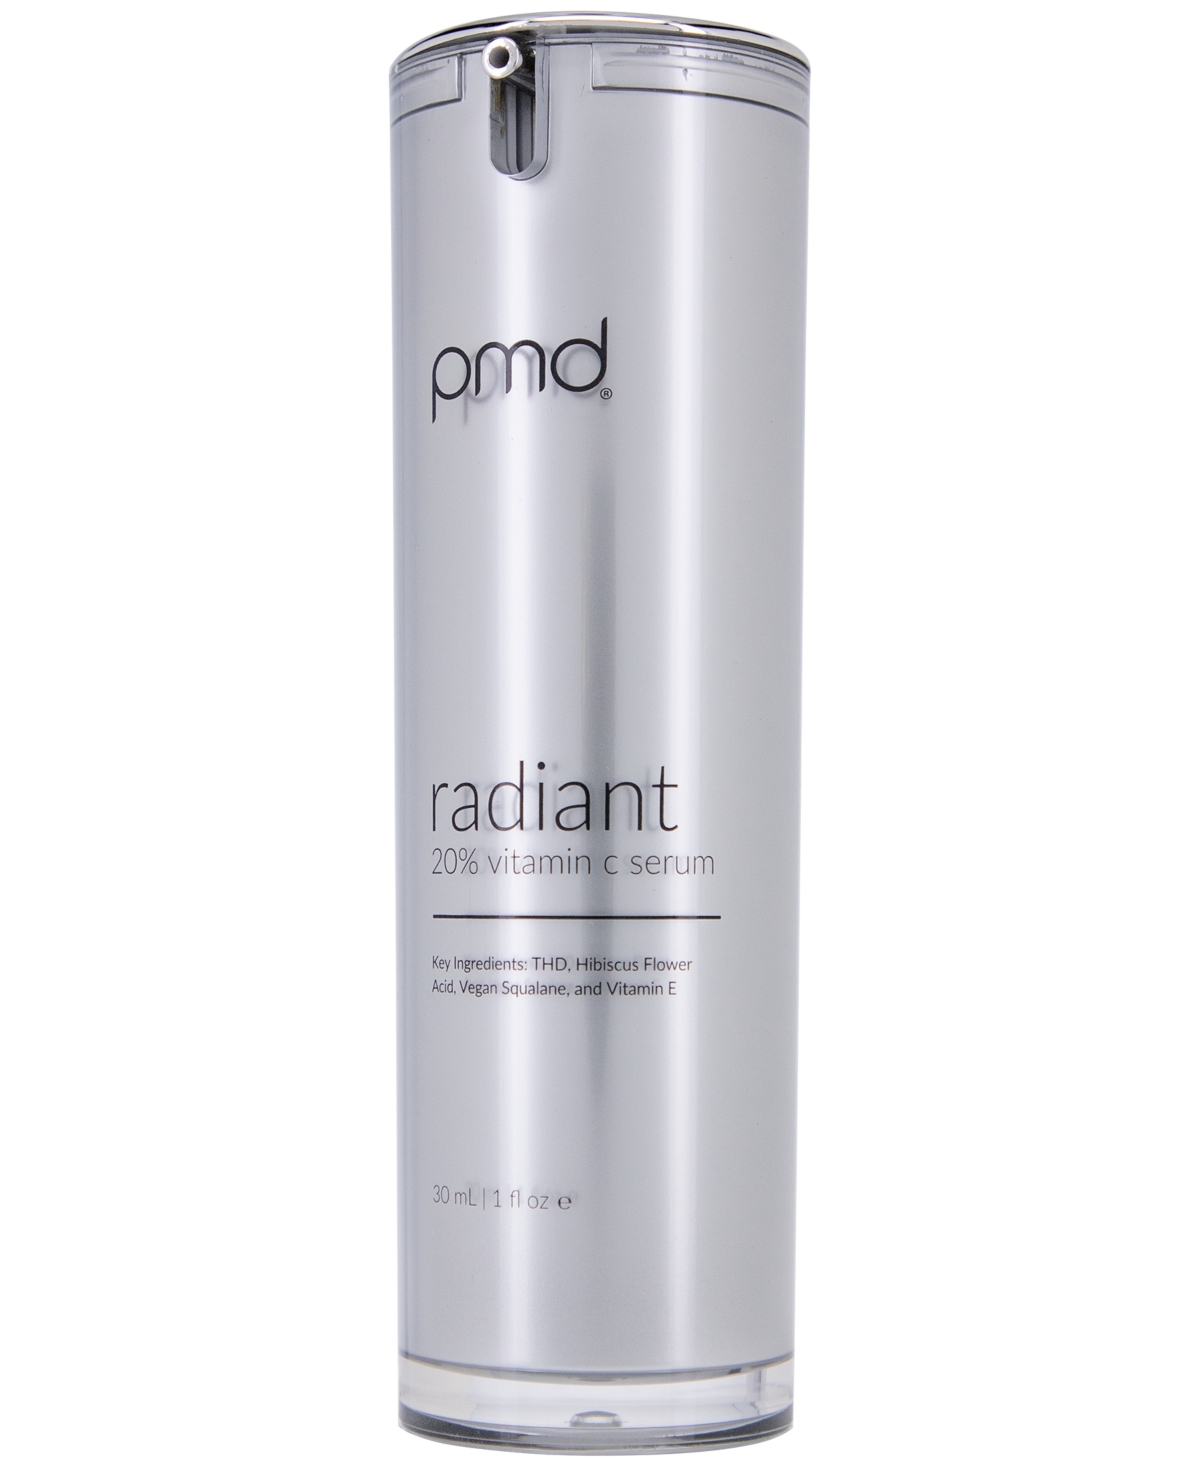 Pmd Radiant 20% Vitamin C Serum, 30ml In White